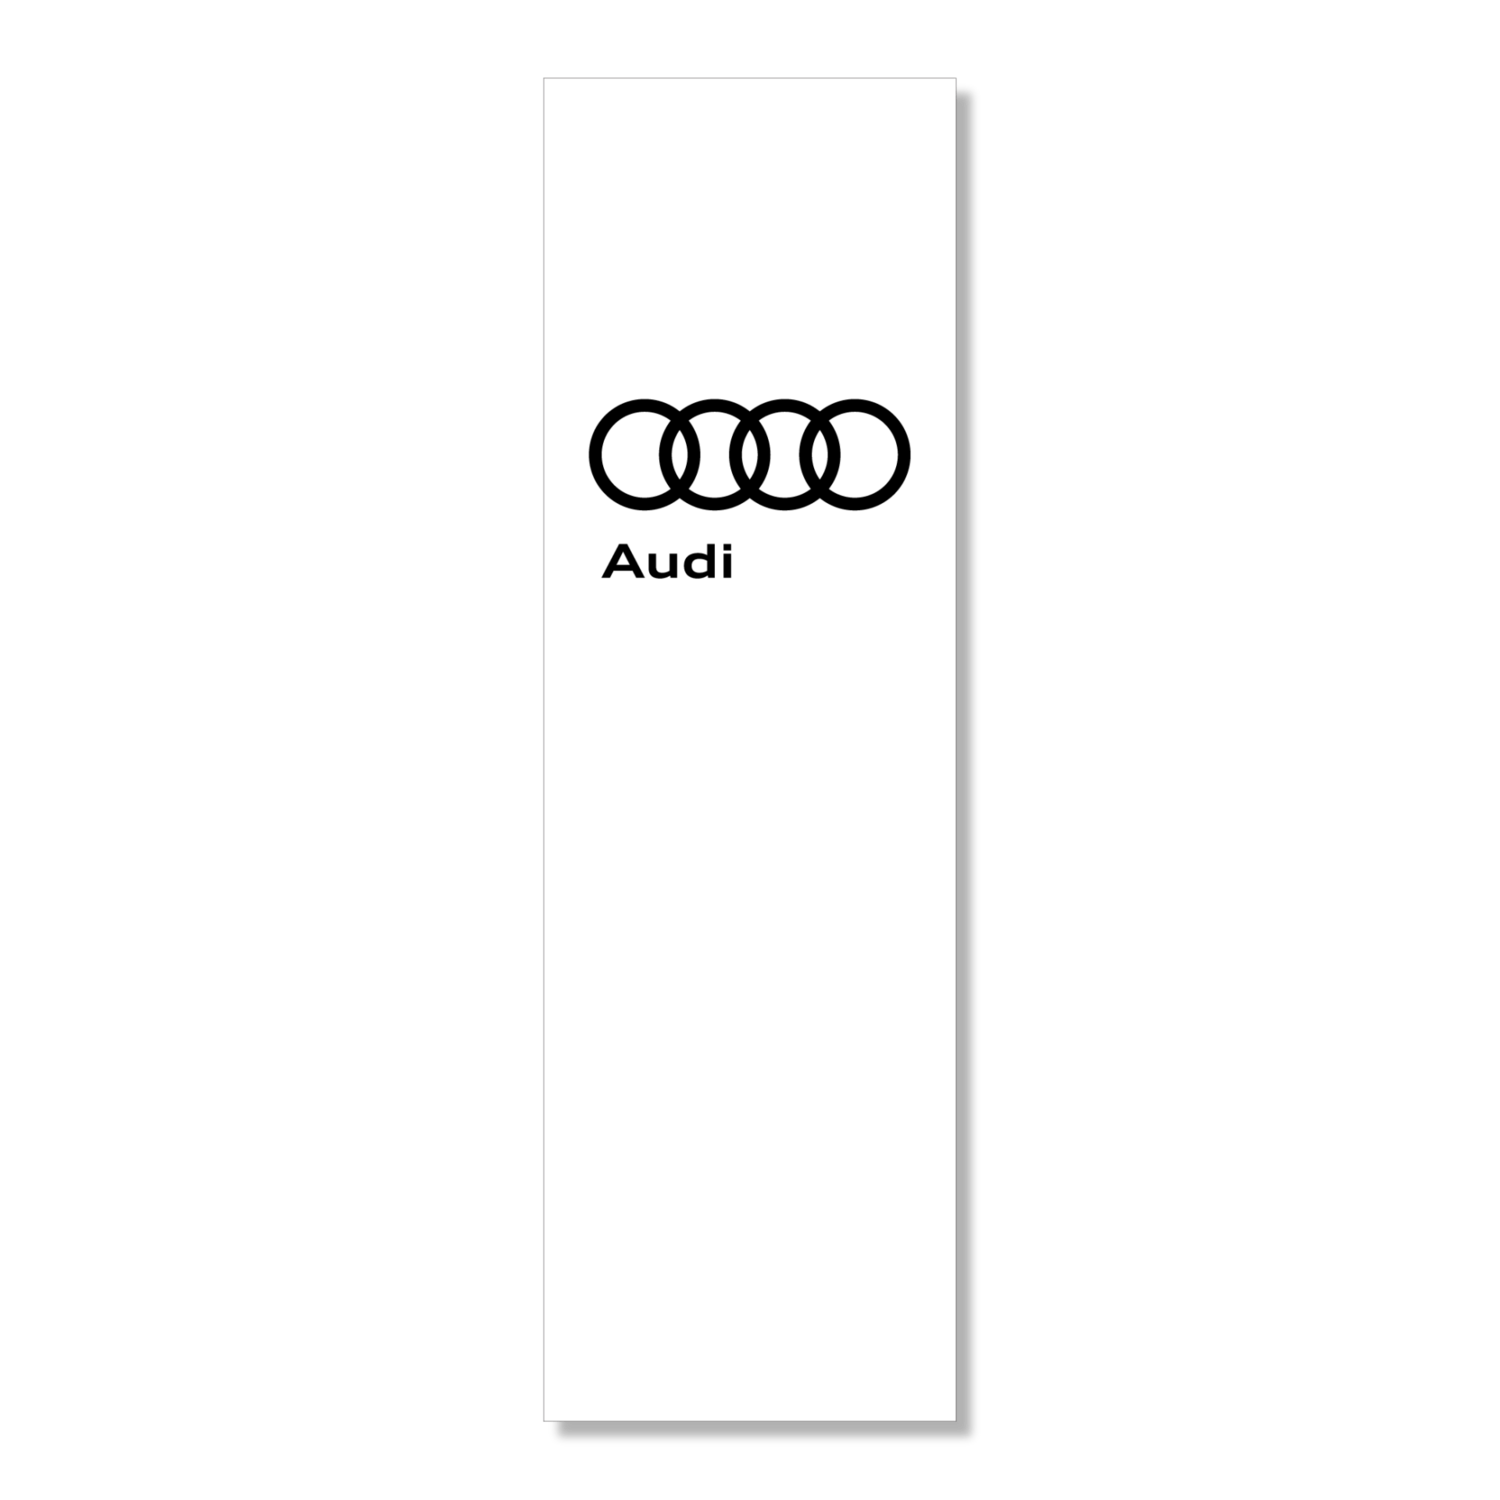 2021 Audi 454